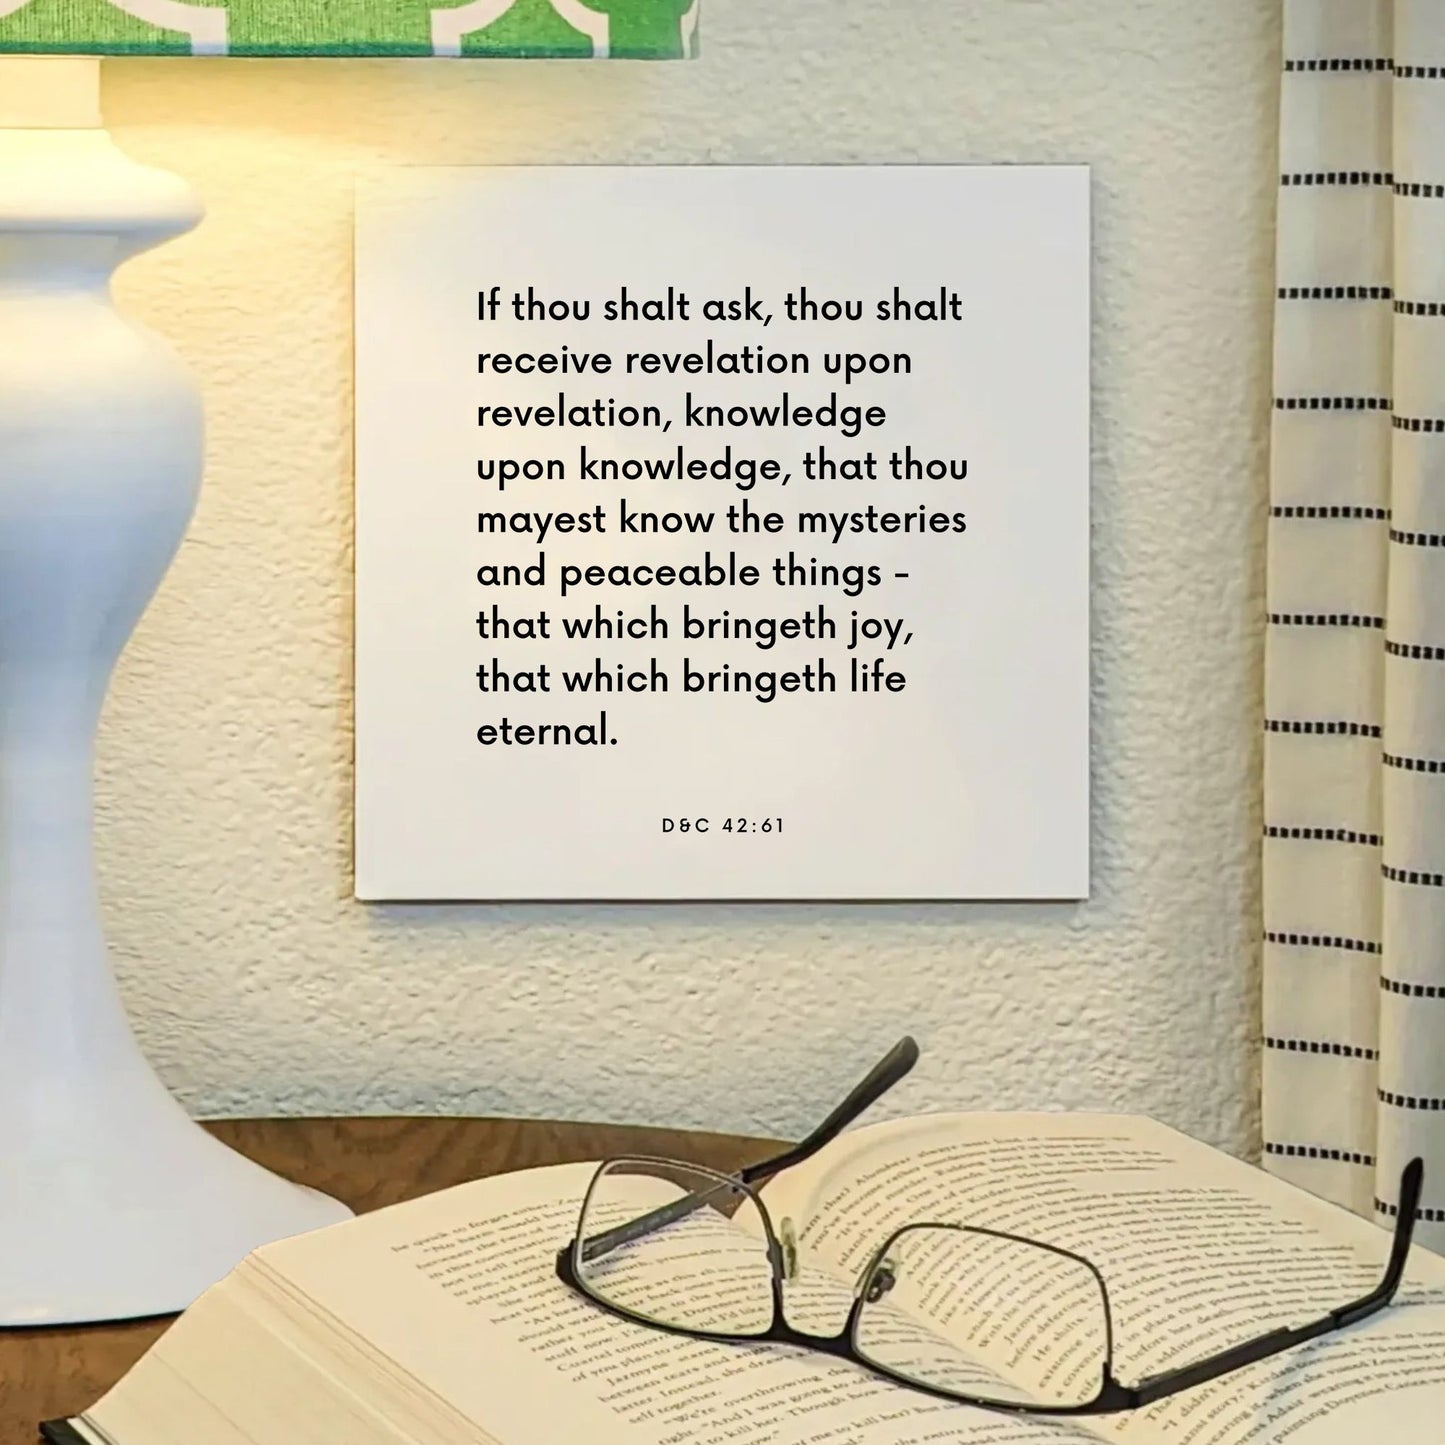 Lamp mouting of the scripture tile for D&C 42:61 - "If thou shalt ask, thou shalt receive revelation"